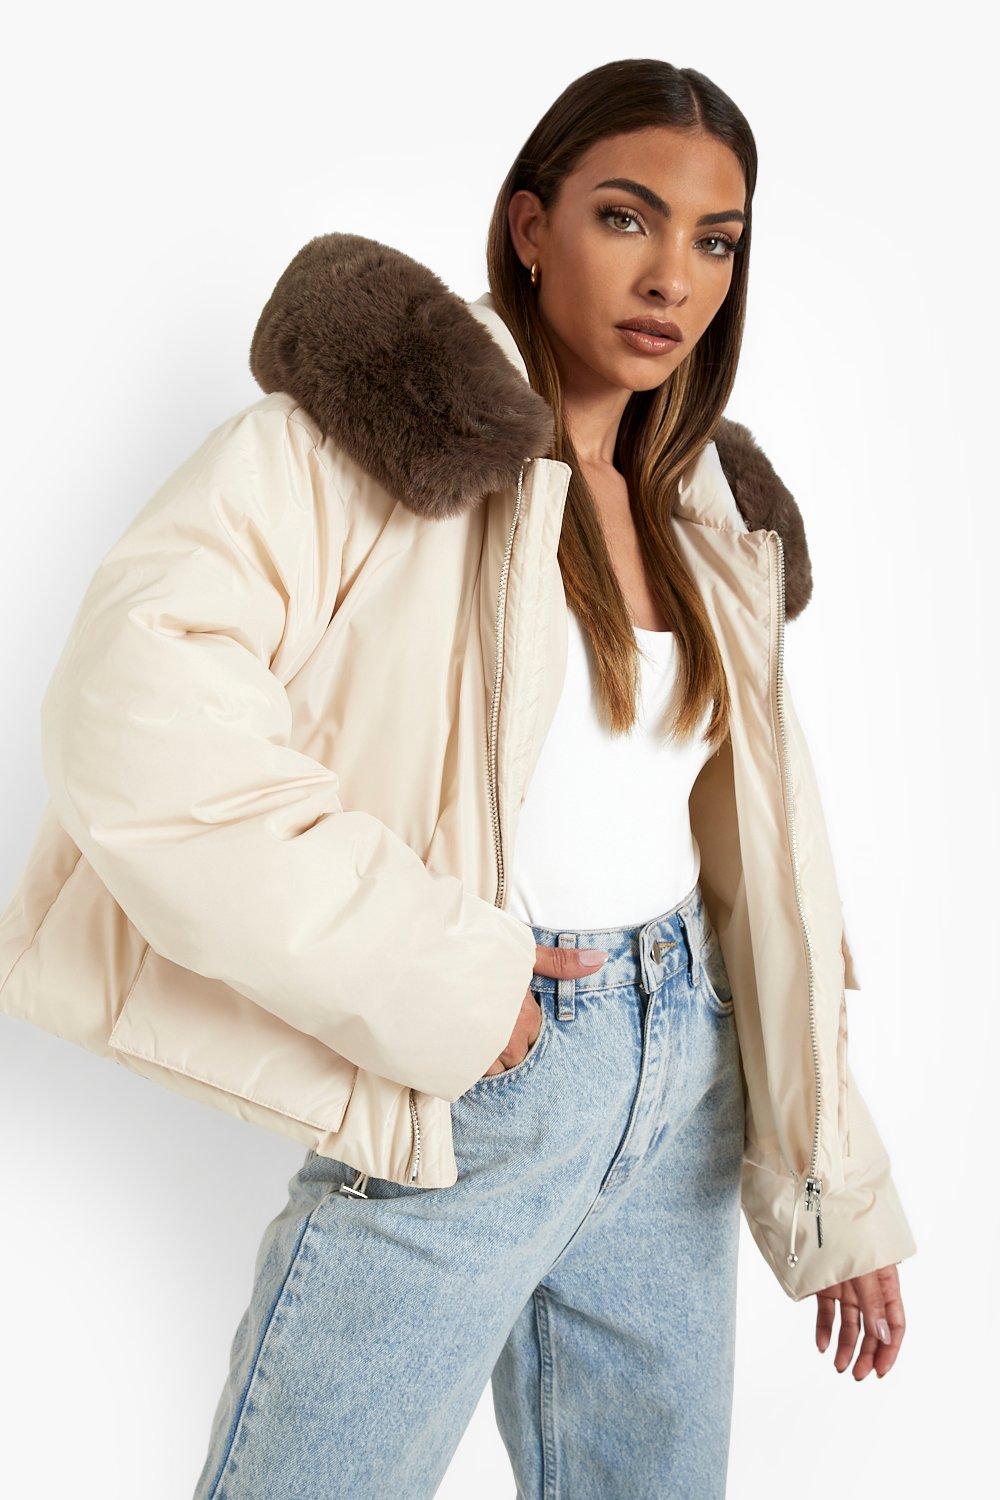 New Womens  Faux Fur Waistband Slim Short Overcoat Winter Jackets Outwear Tops